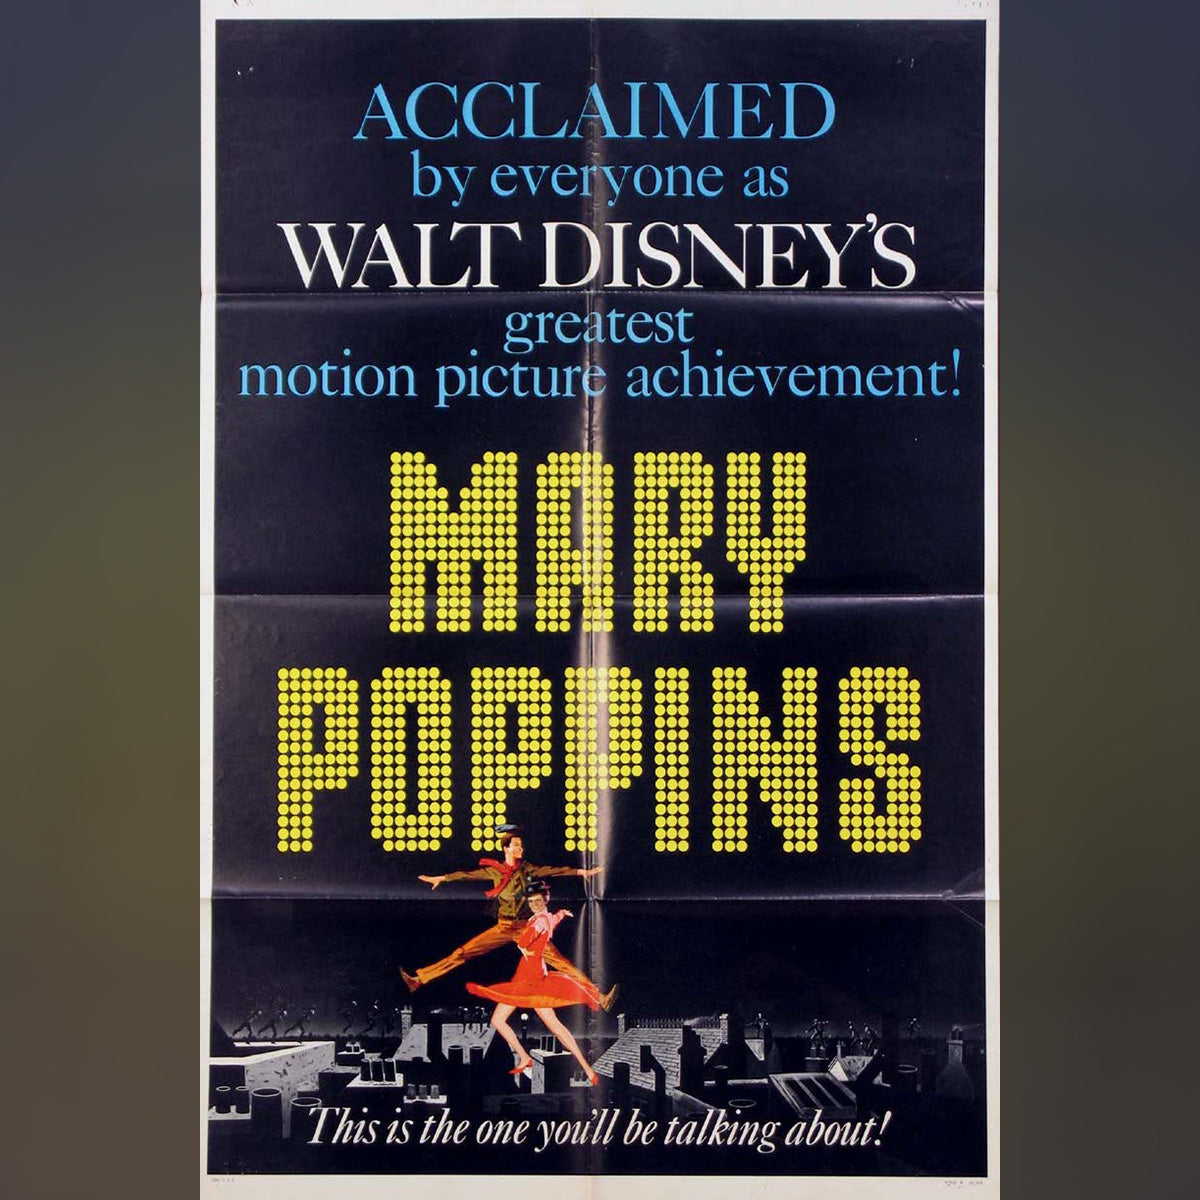 Original Movie Poster of Mary Poppins (1964)